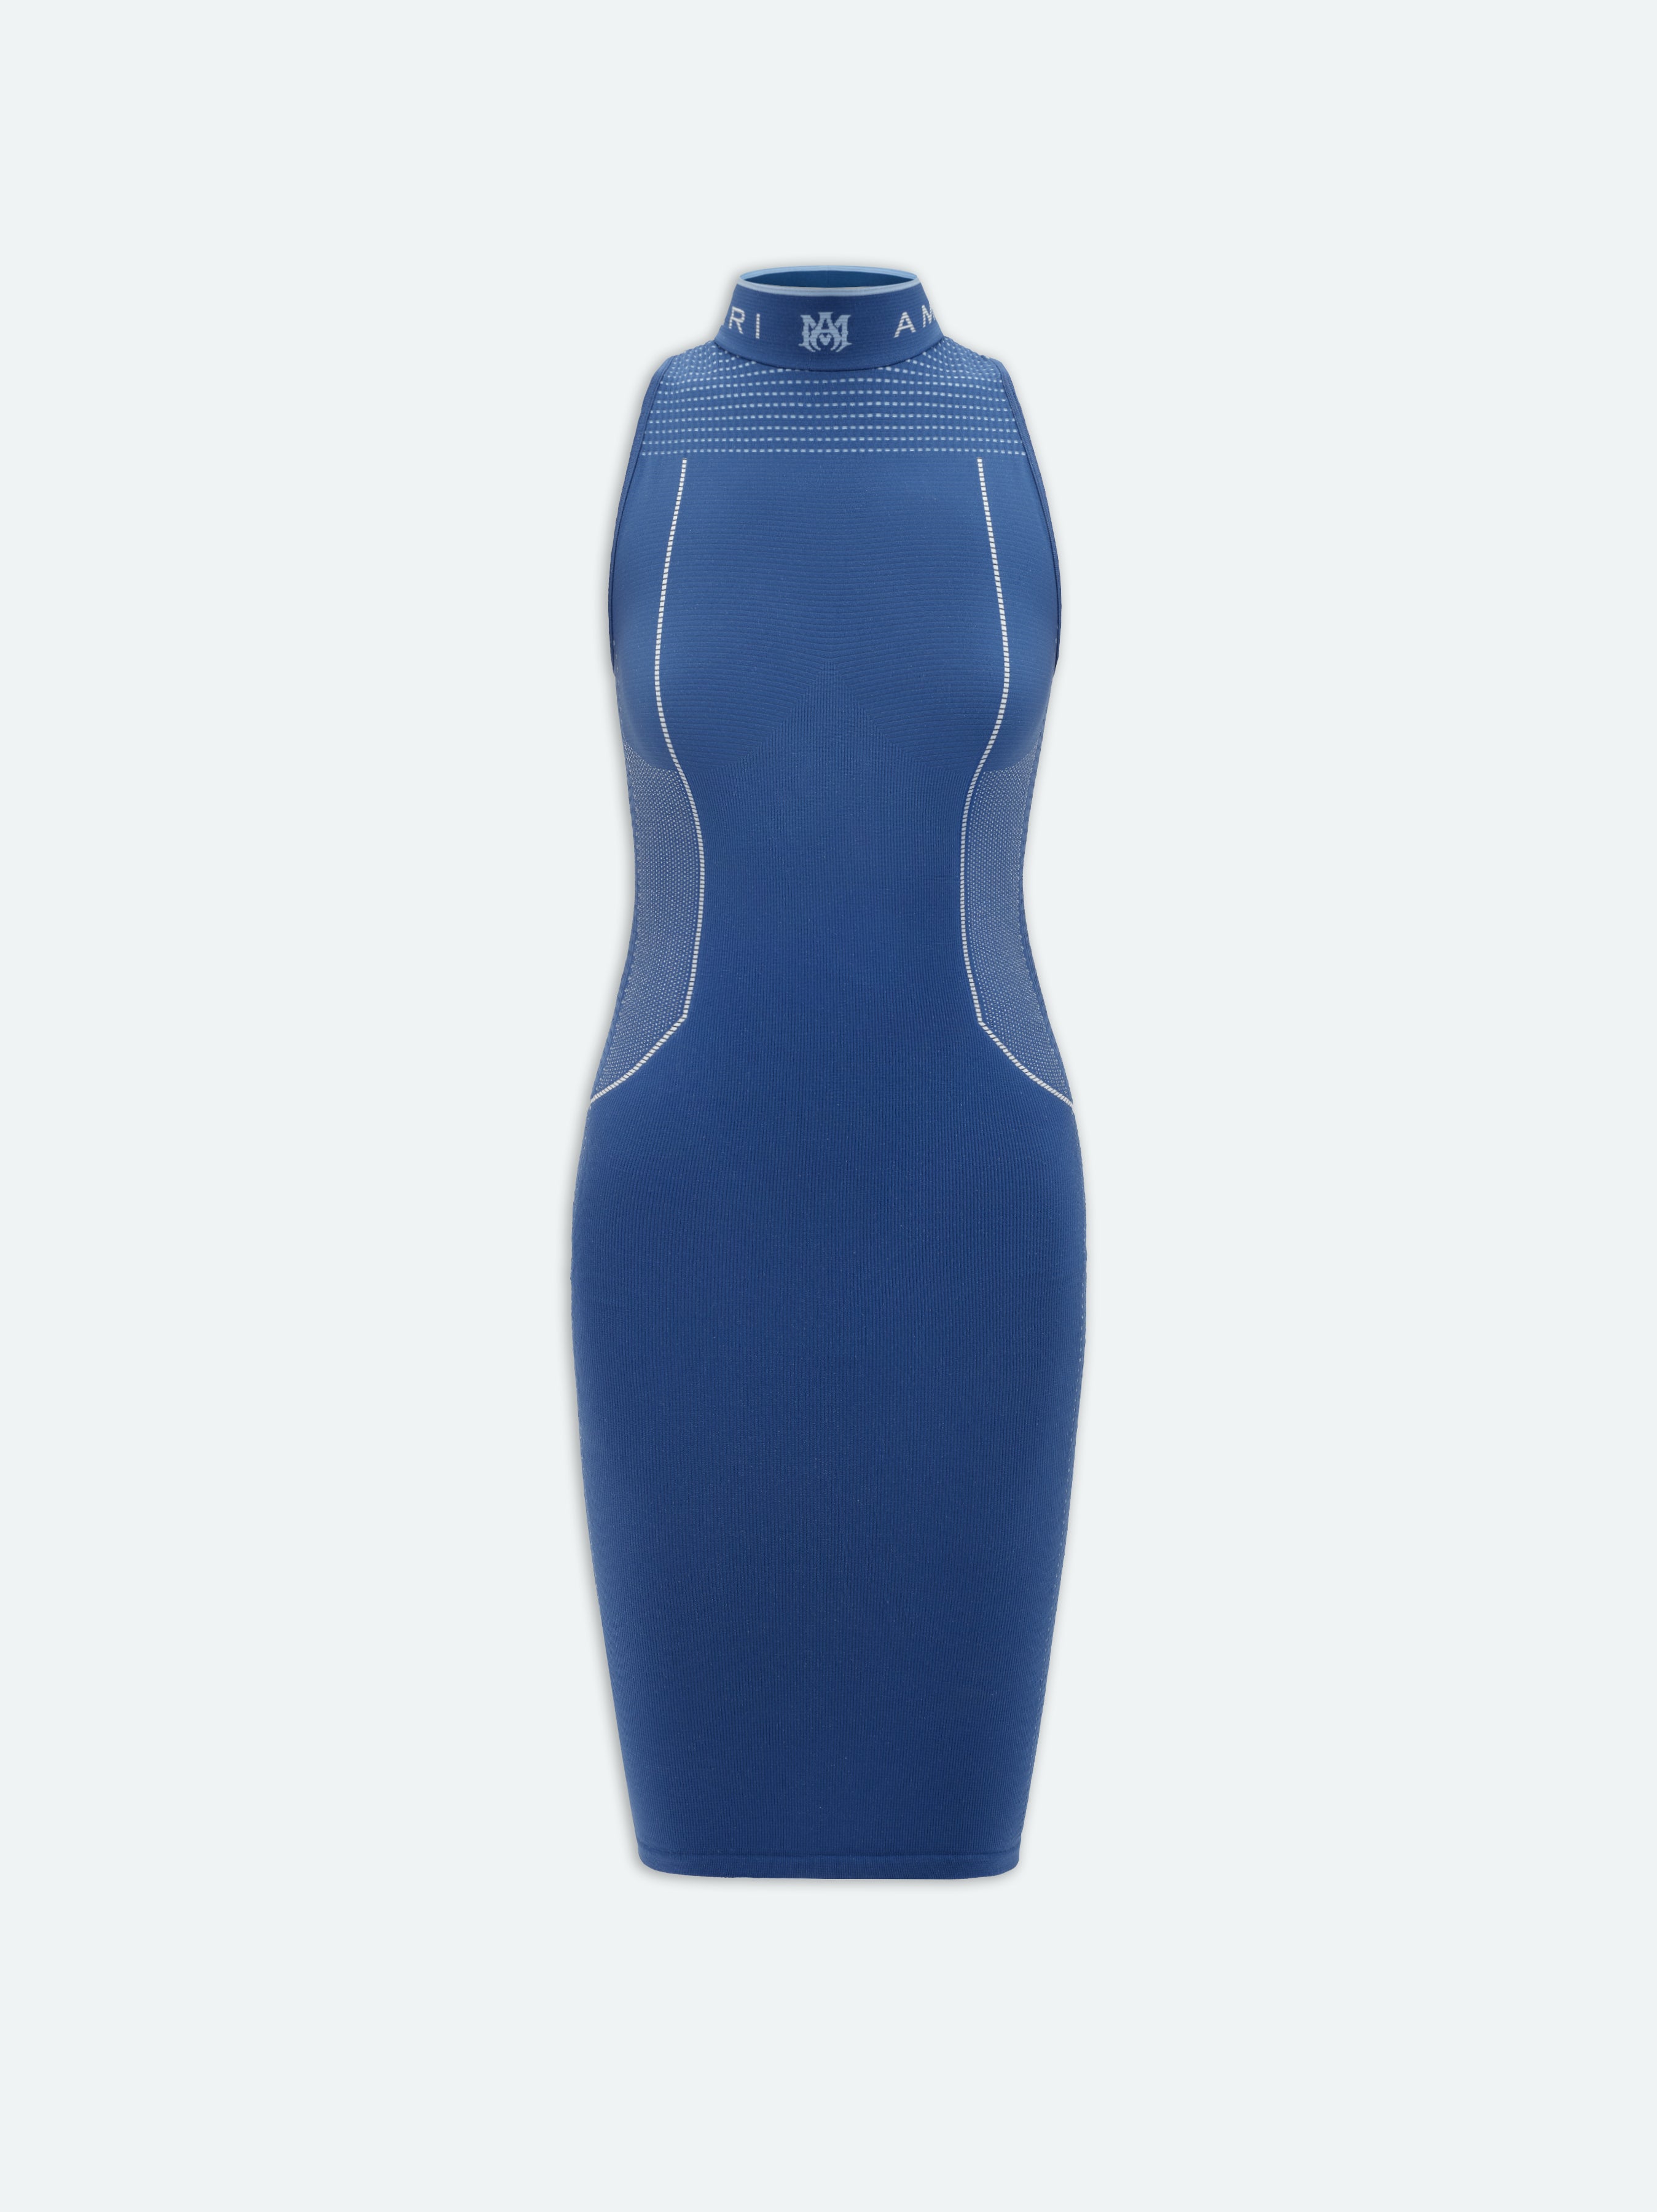 Product WOMEN - MA SEAMLESS MINI DRESS - Dark Blue featured image